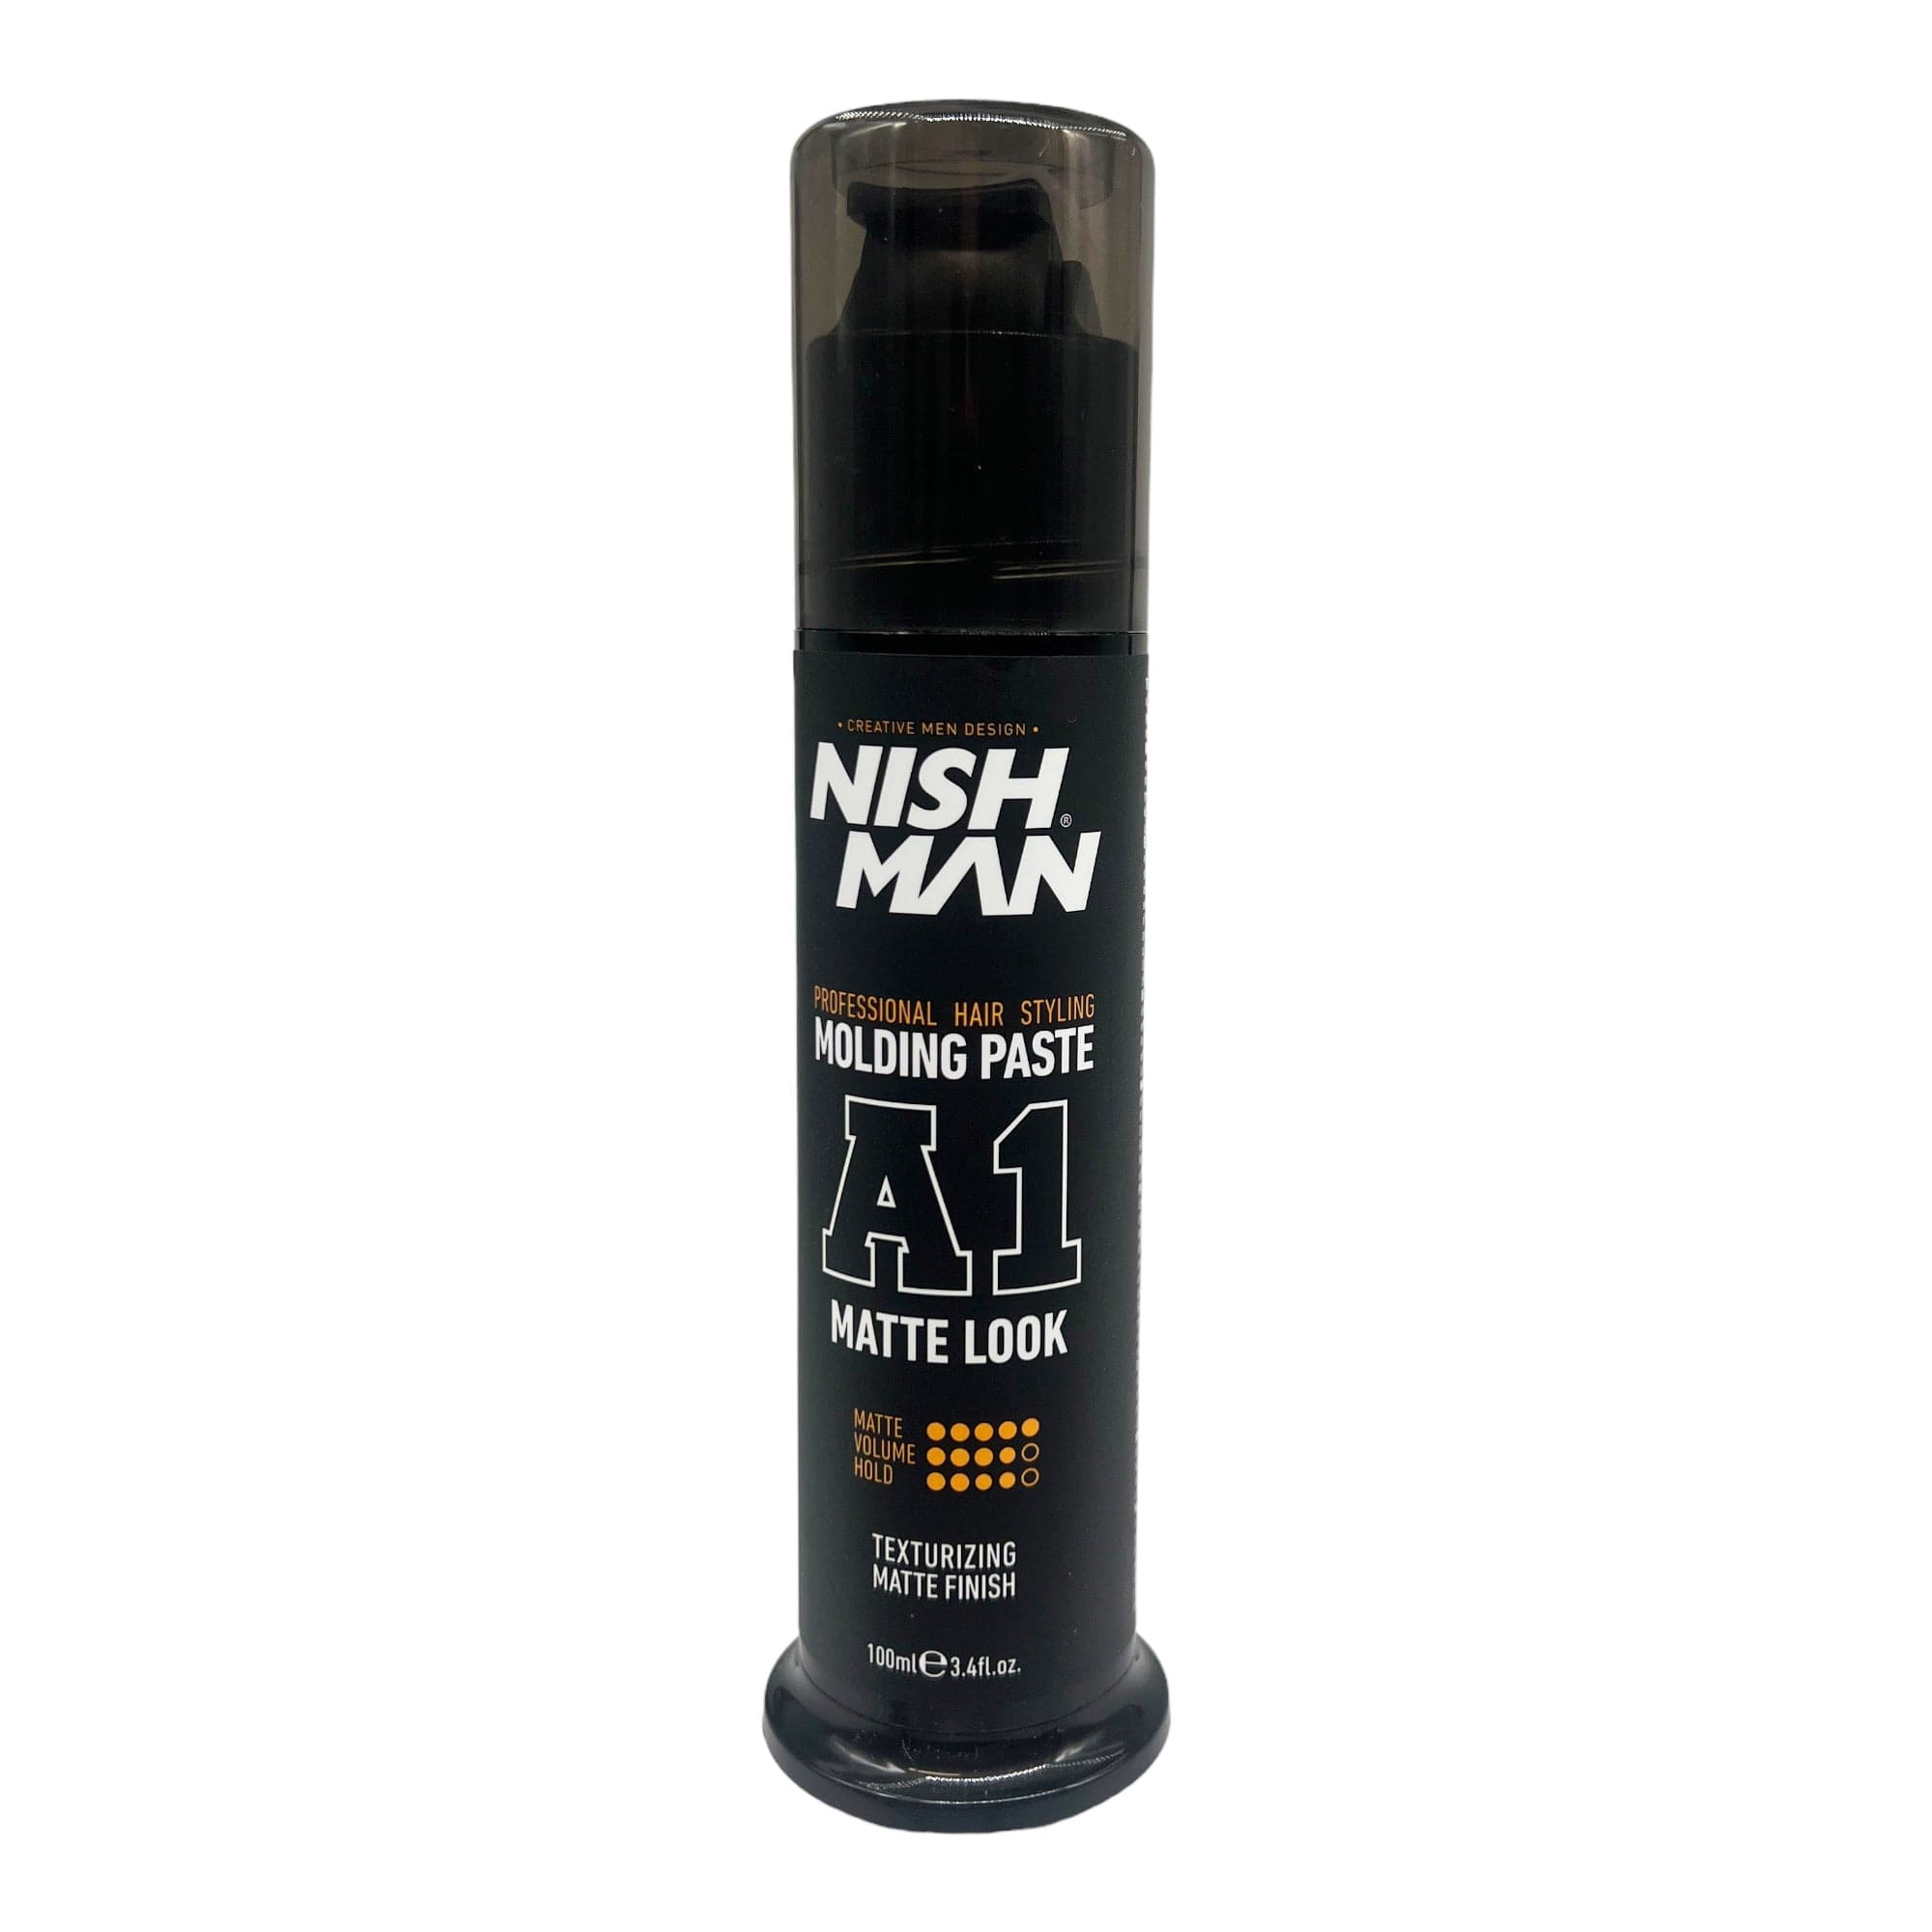 Nishman - Hair Styling Molding Paste A1 Matte Look 100ml